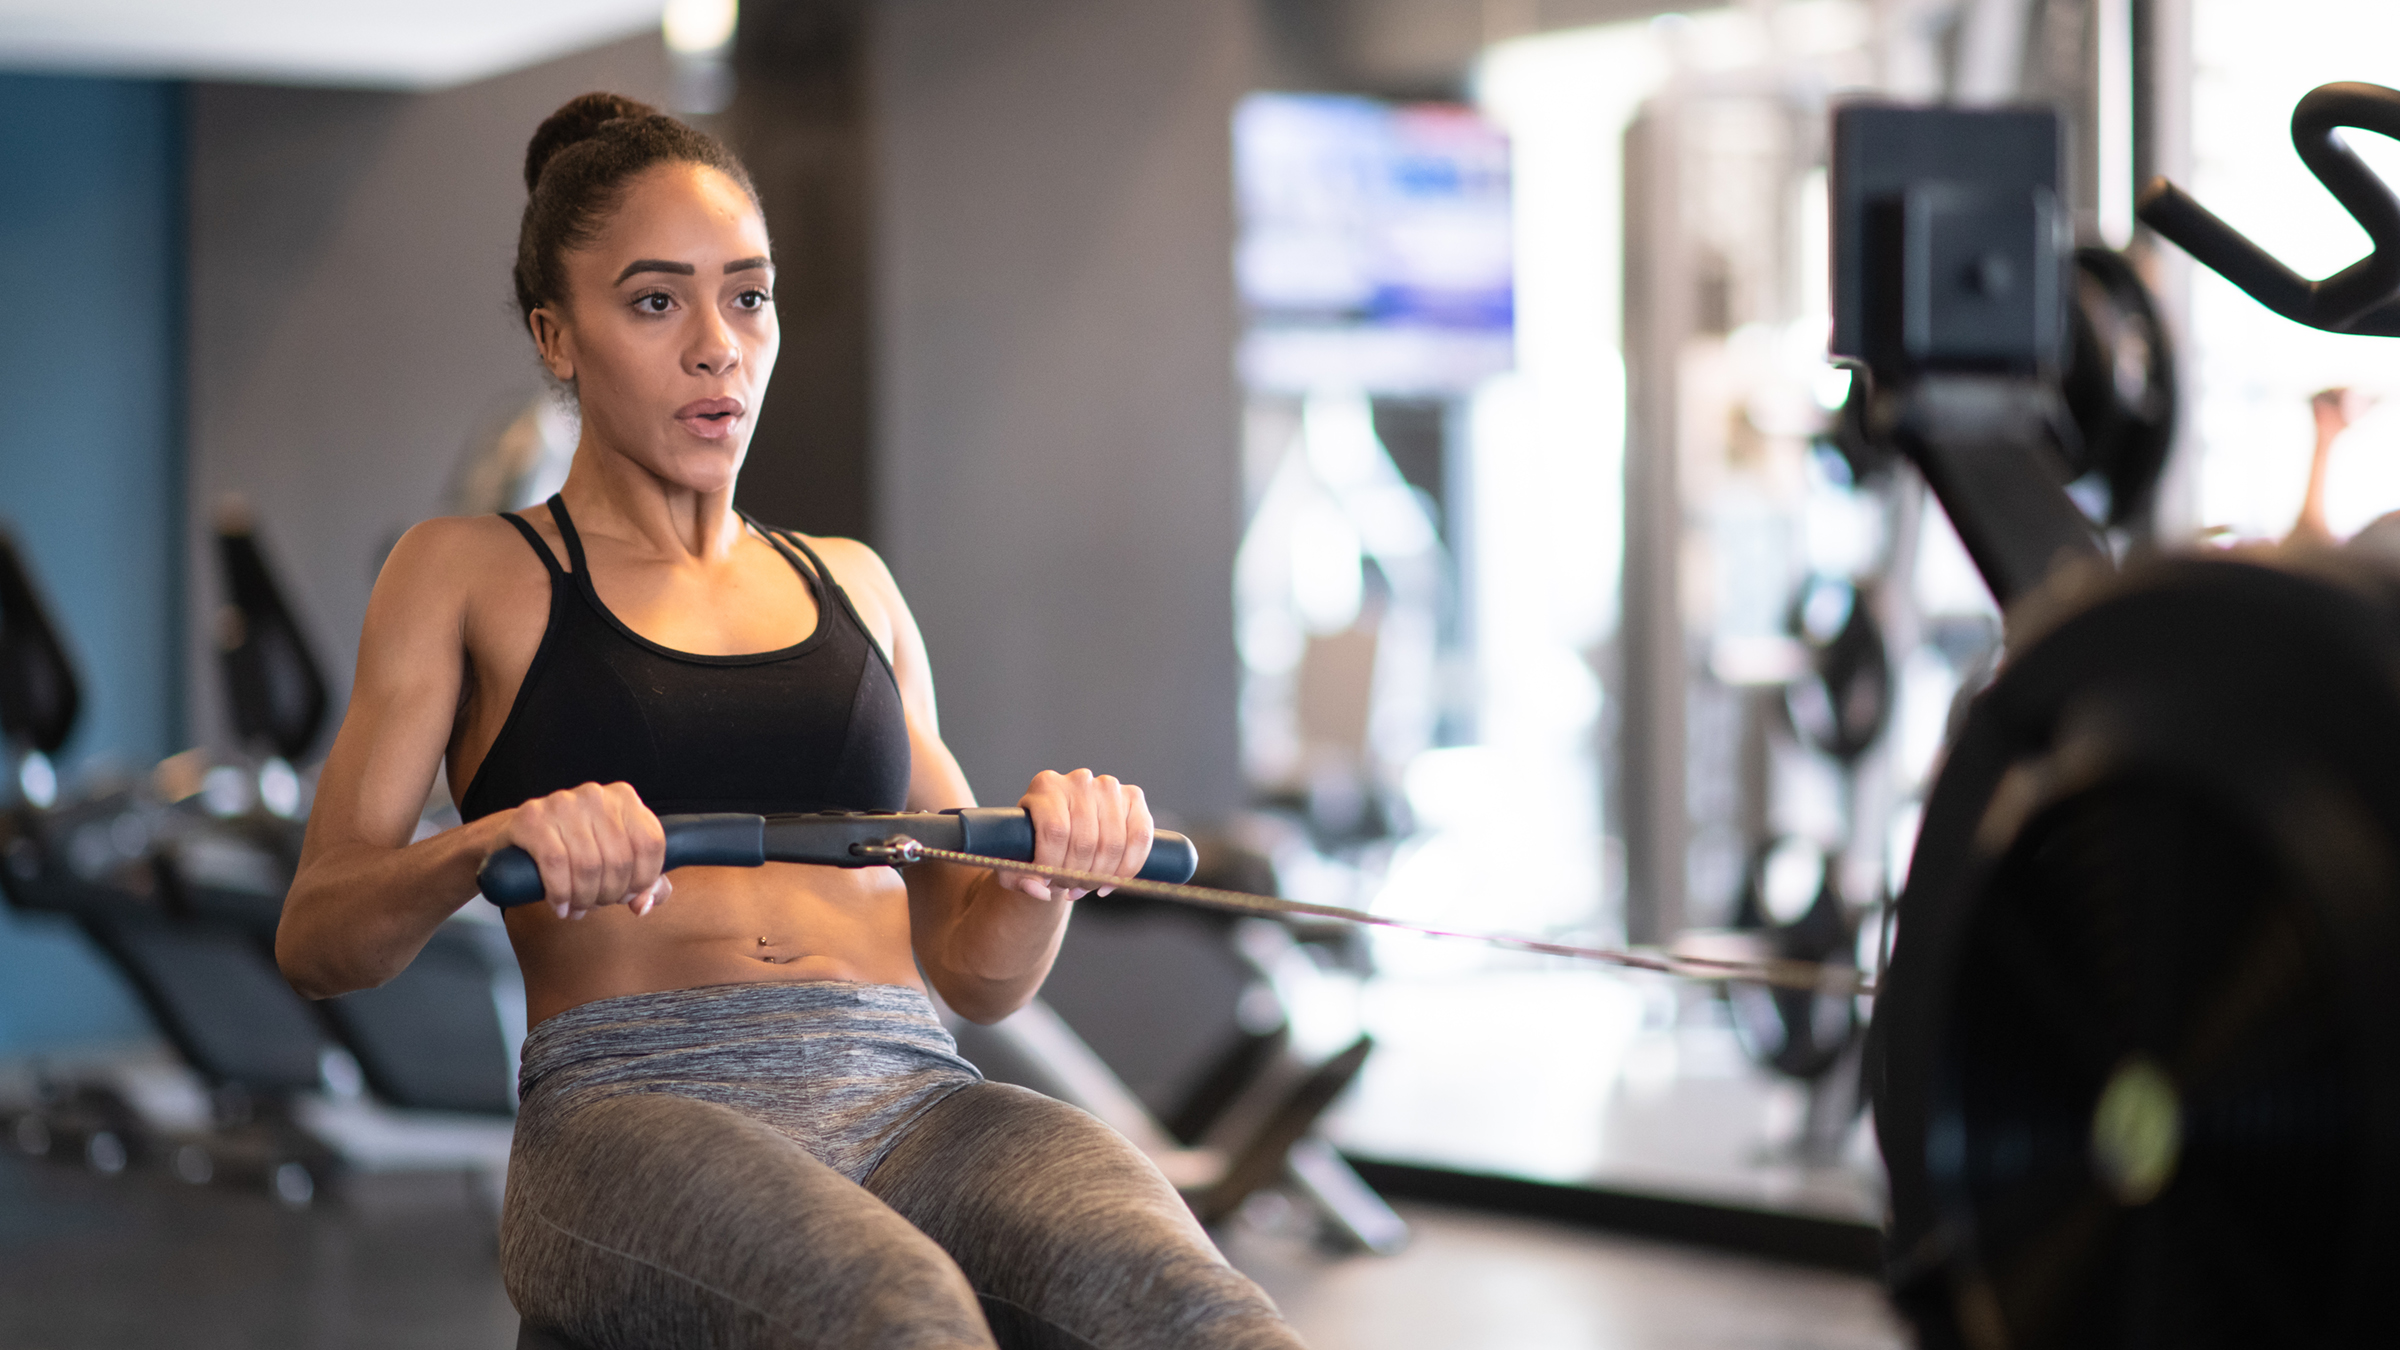 Fitness & Exercise Equipment – Pilates, Rowing Machines, Leg